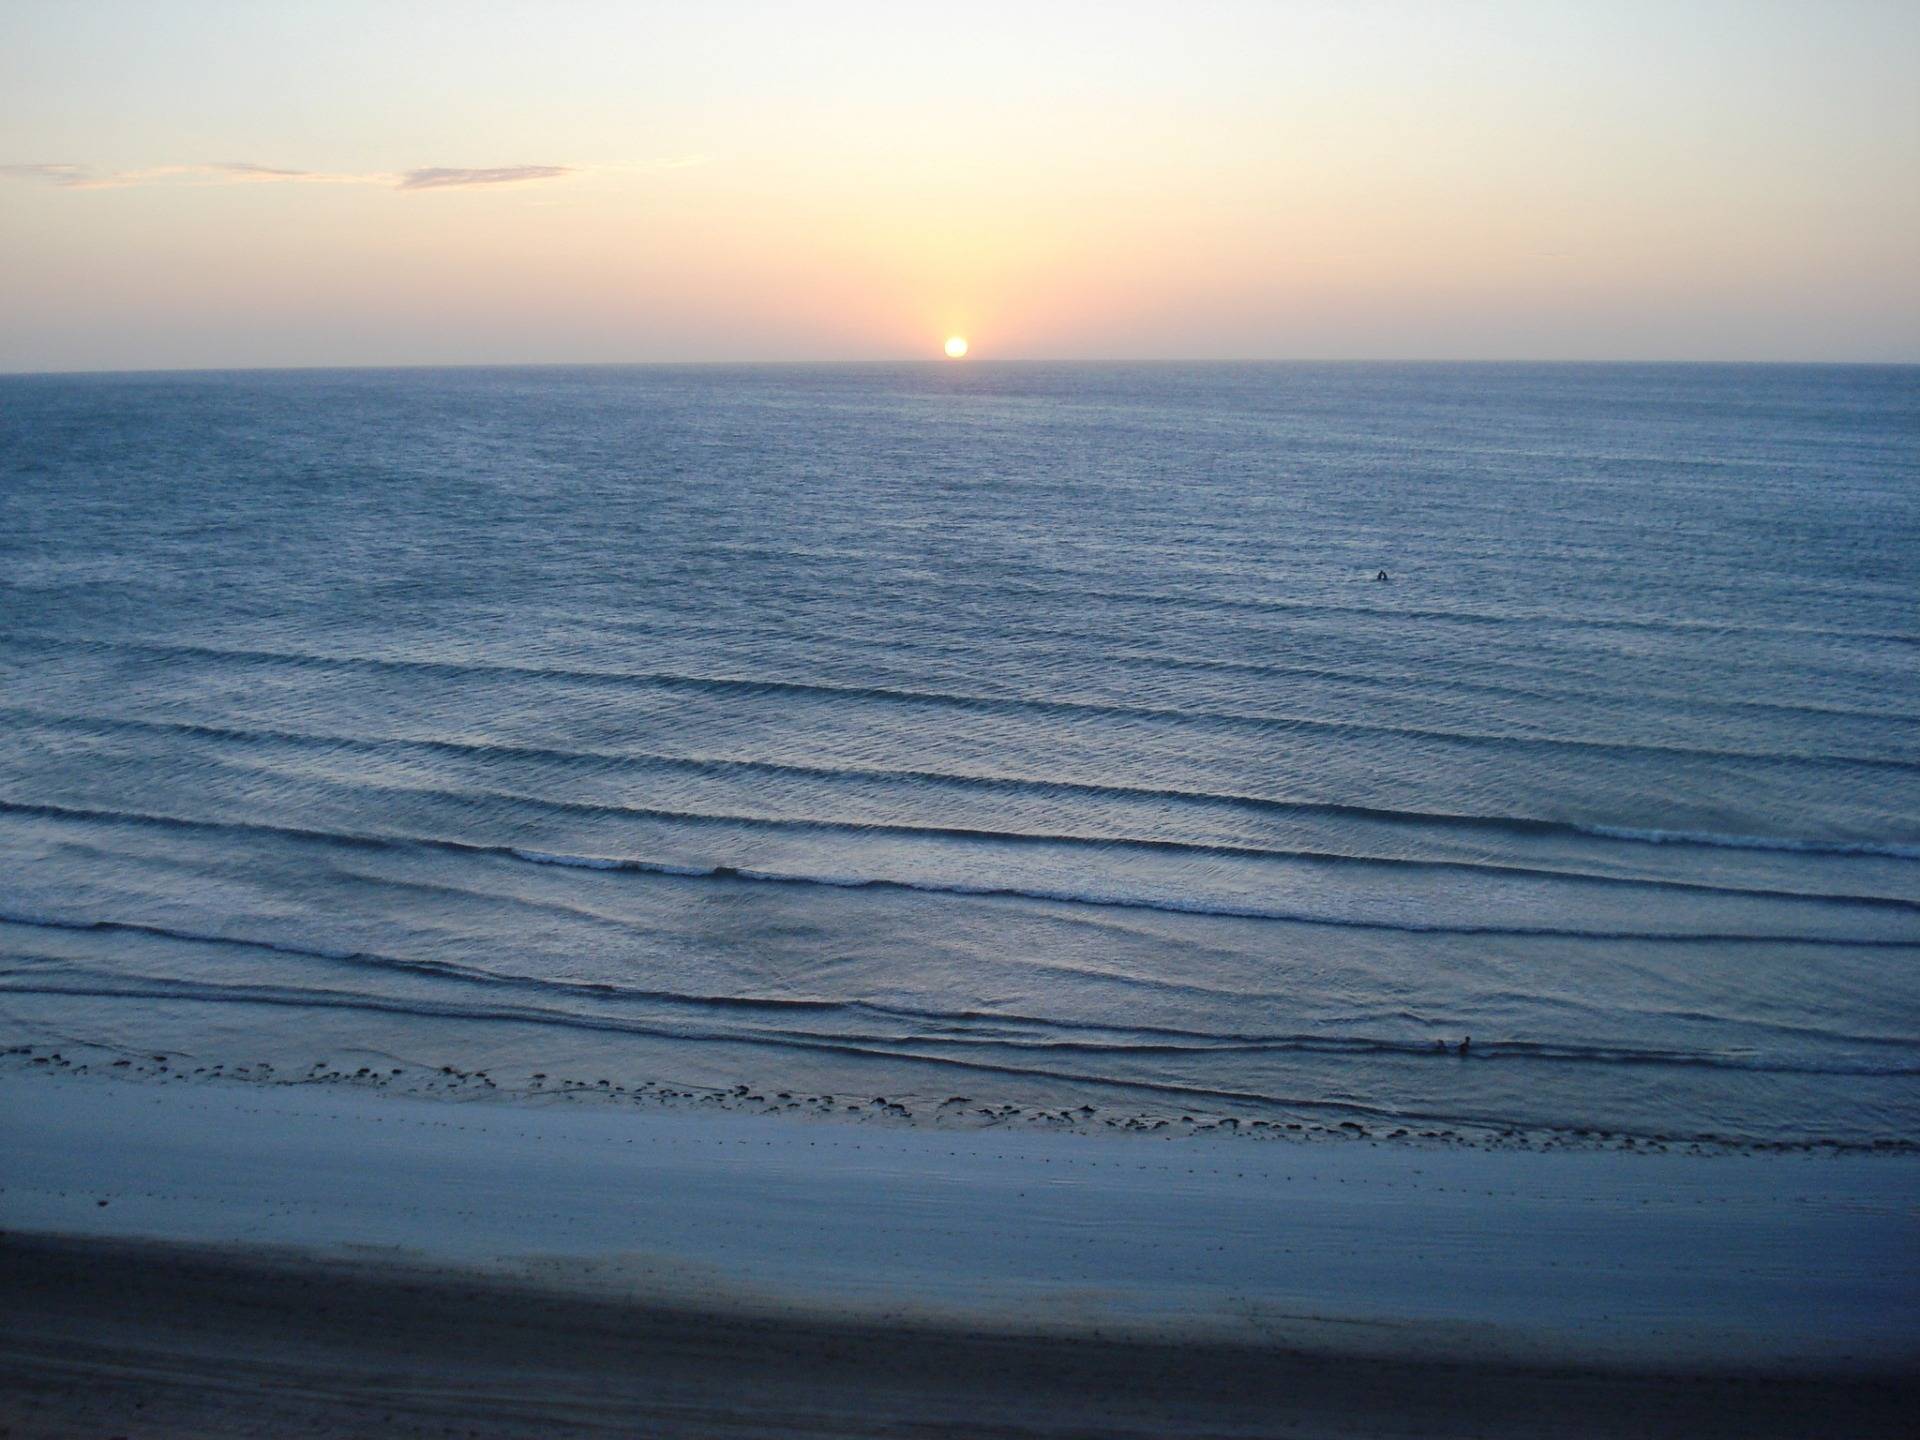 Sunset from the dune Por do Sol